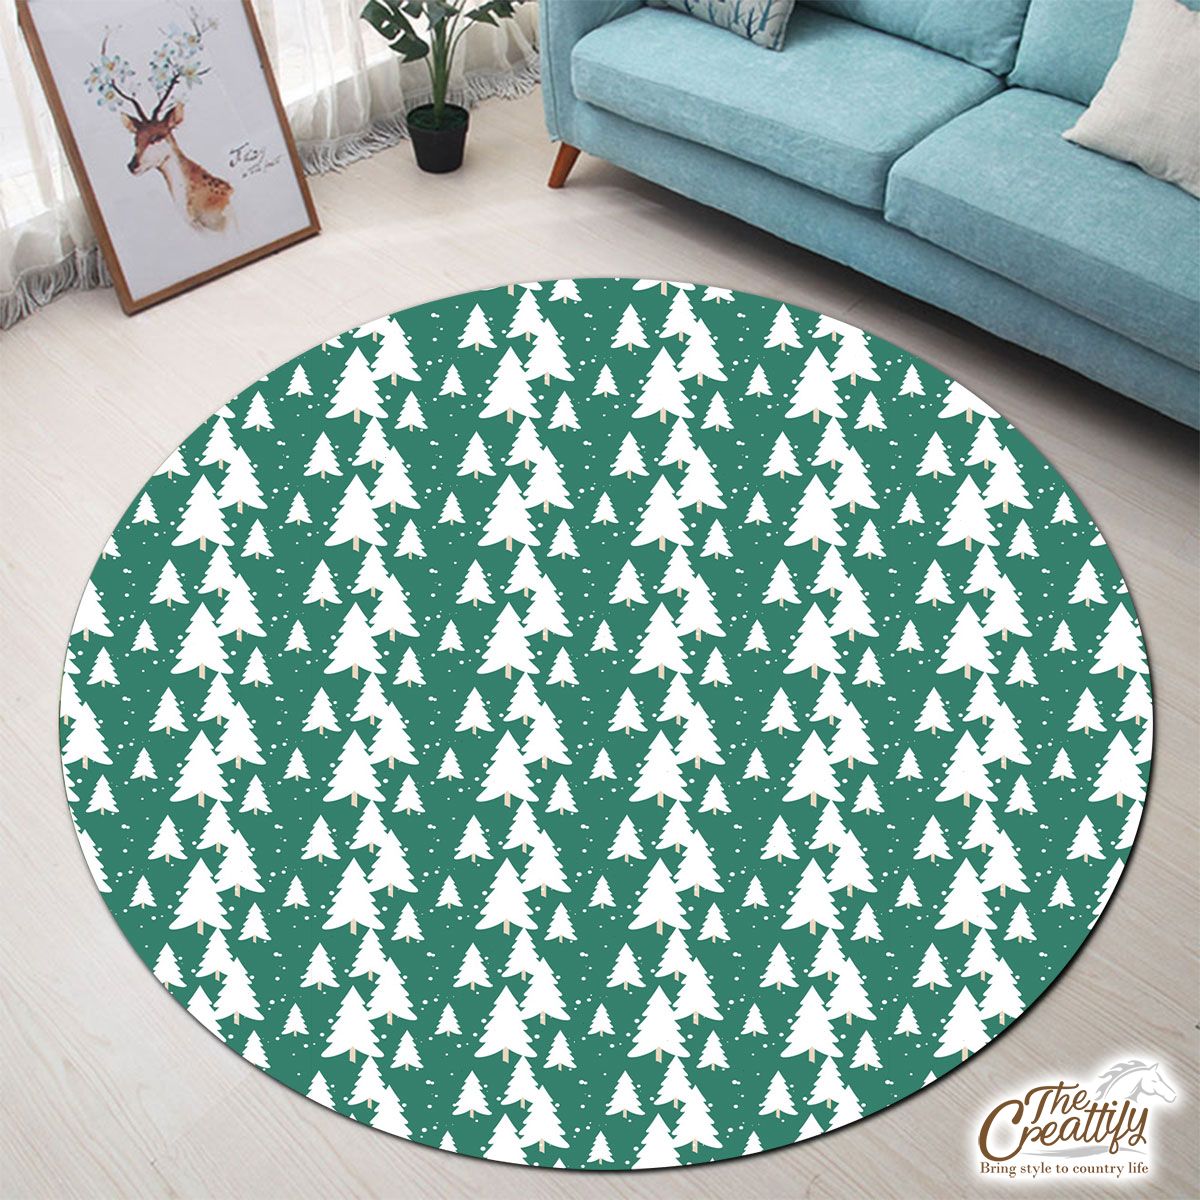 Green And White Christmas Tree Round Carpet